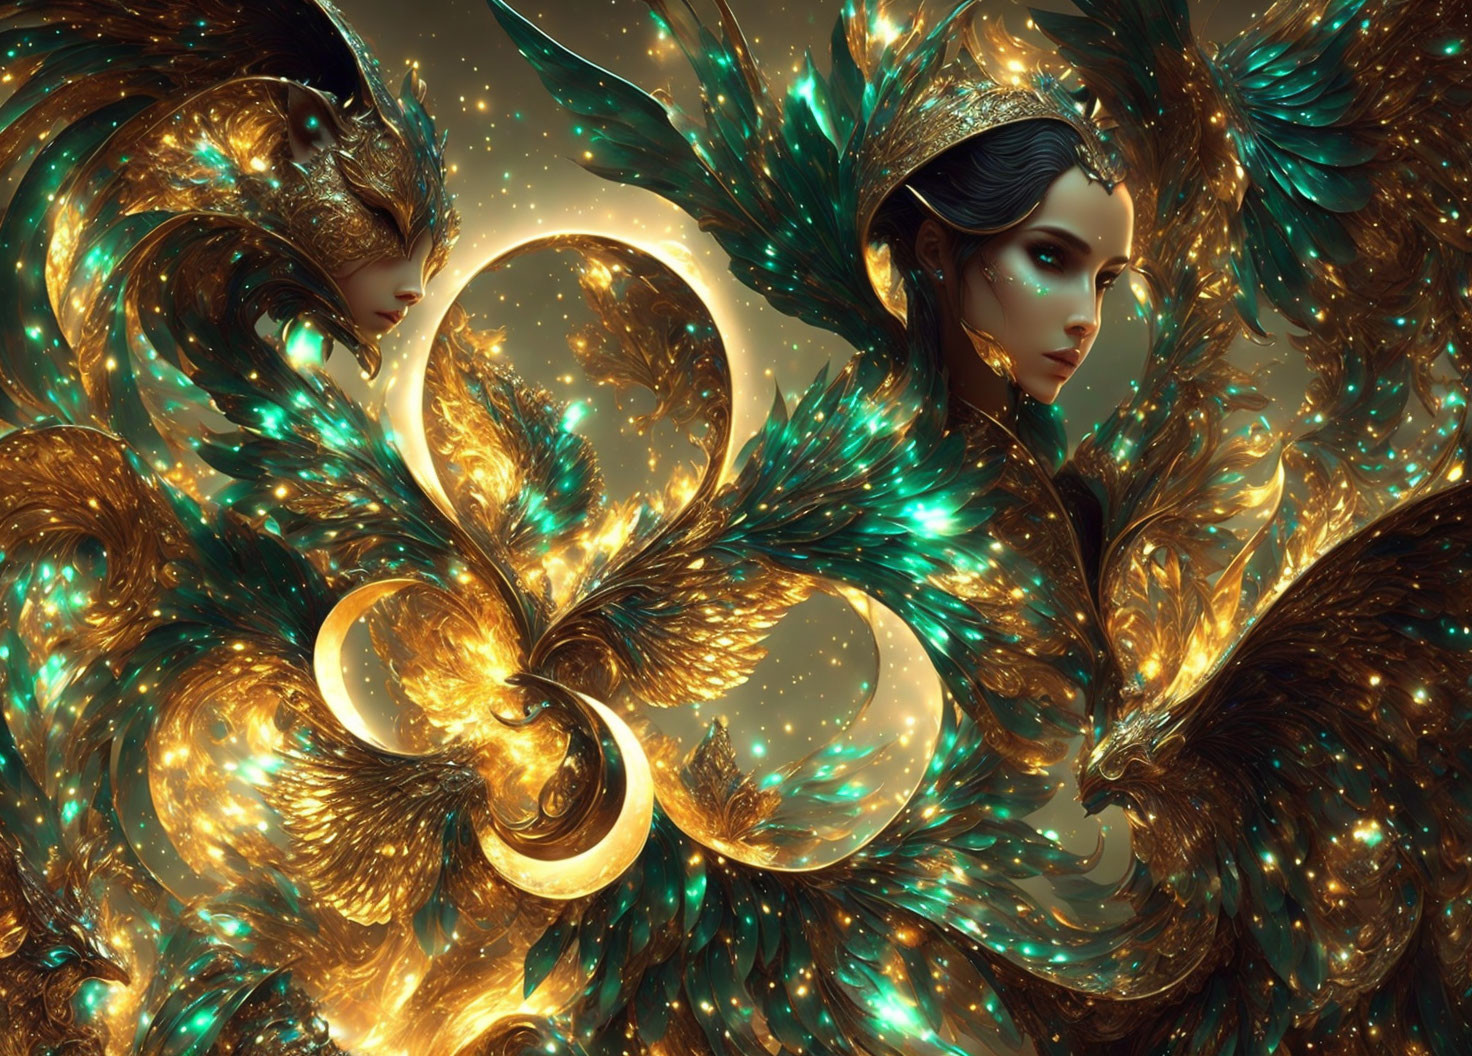 Fantasy Artwork: Elaborate Feather Structures & Golden Masks